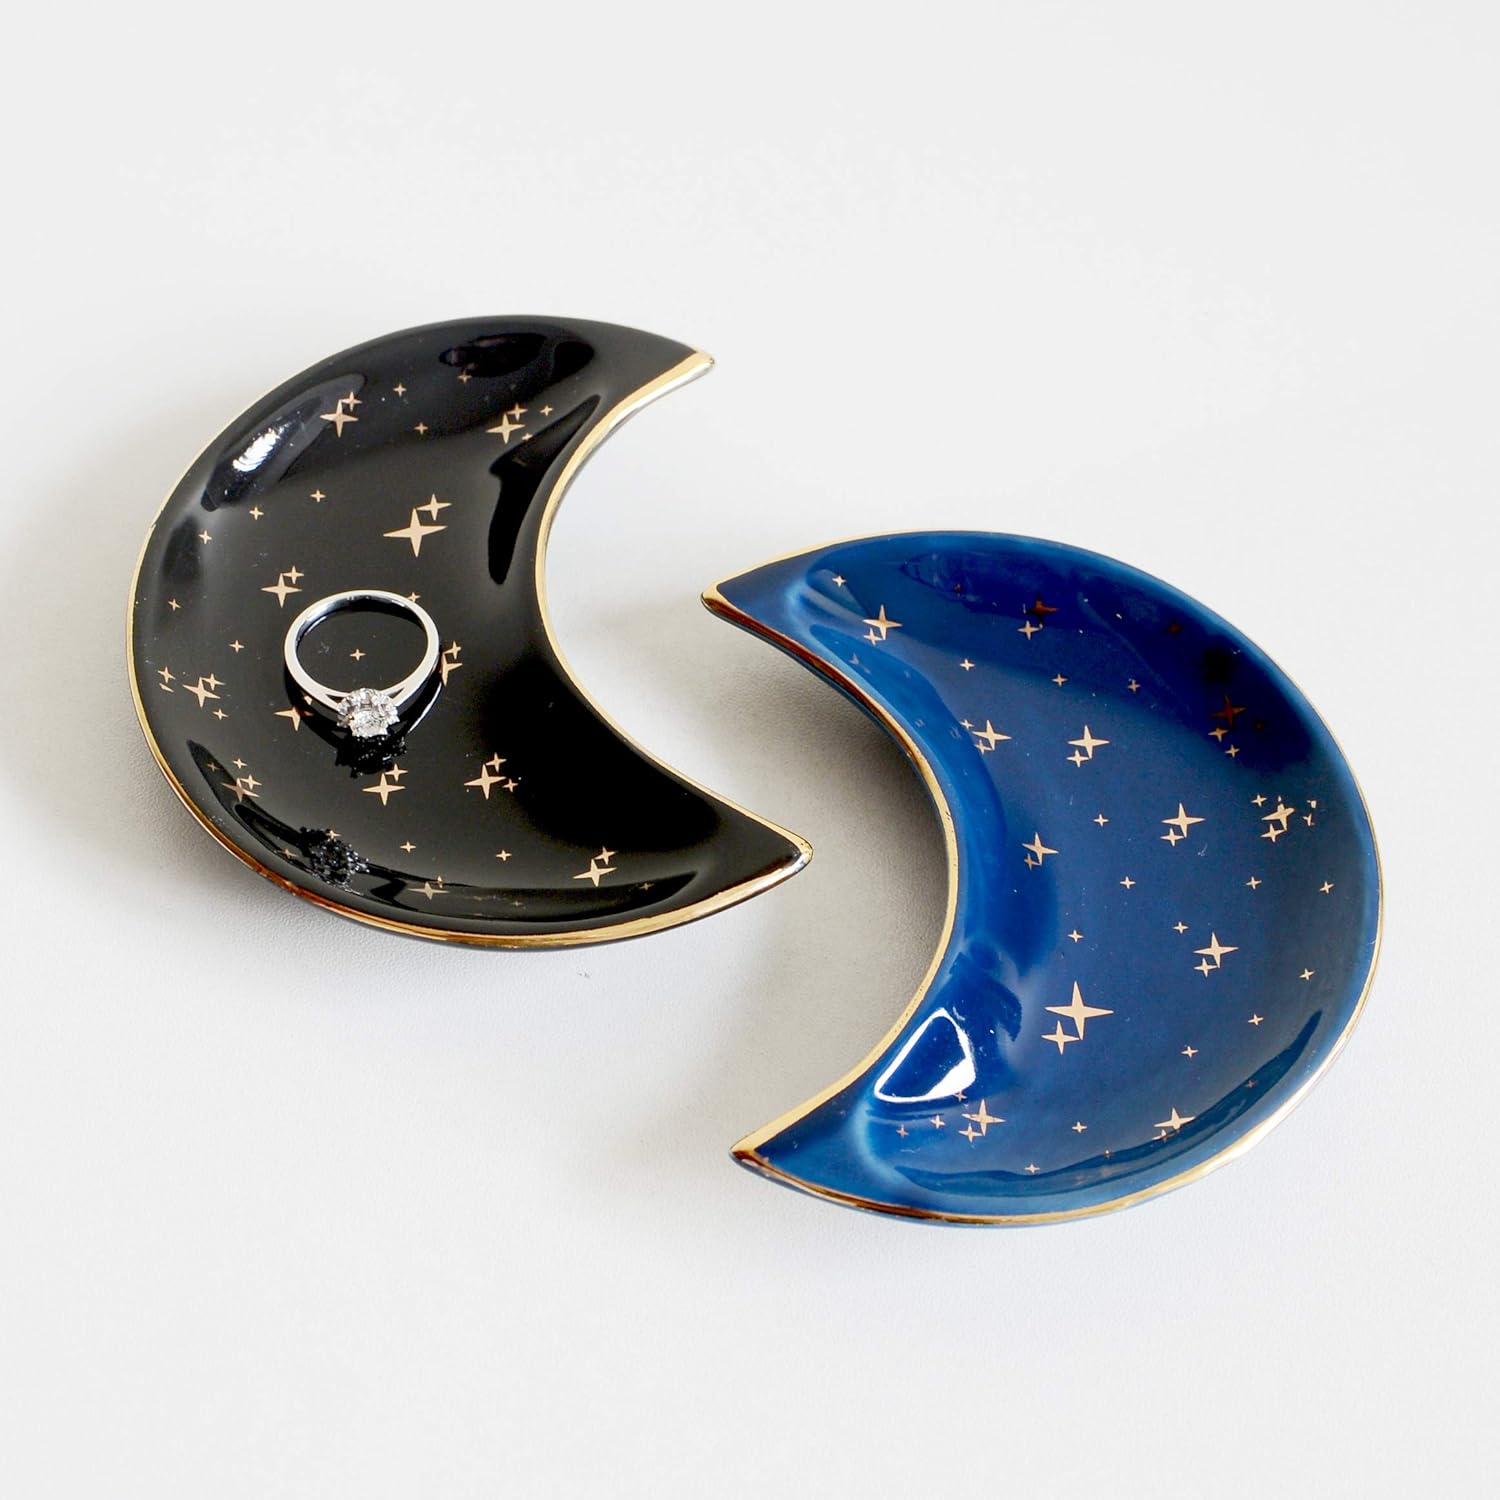 BIHOIB Small Moon Jewelry Dish Tray Review